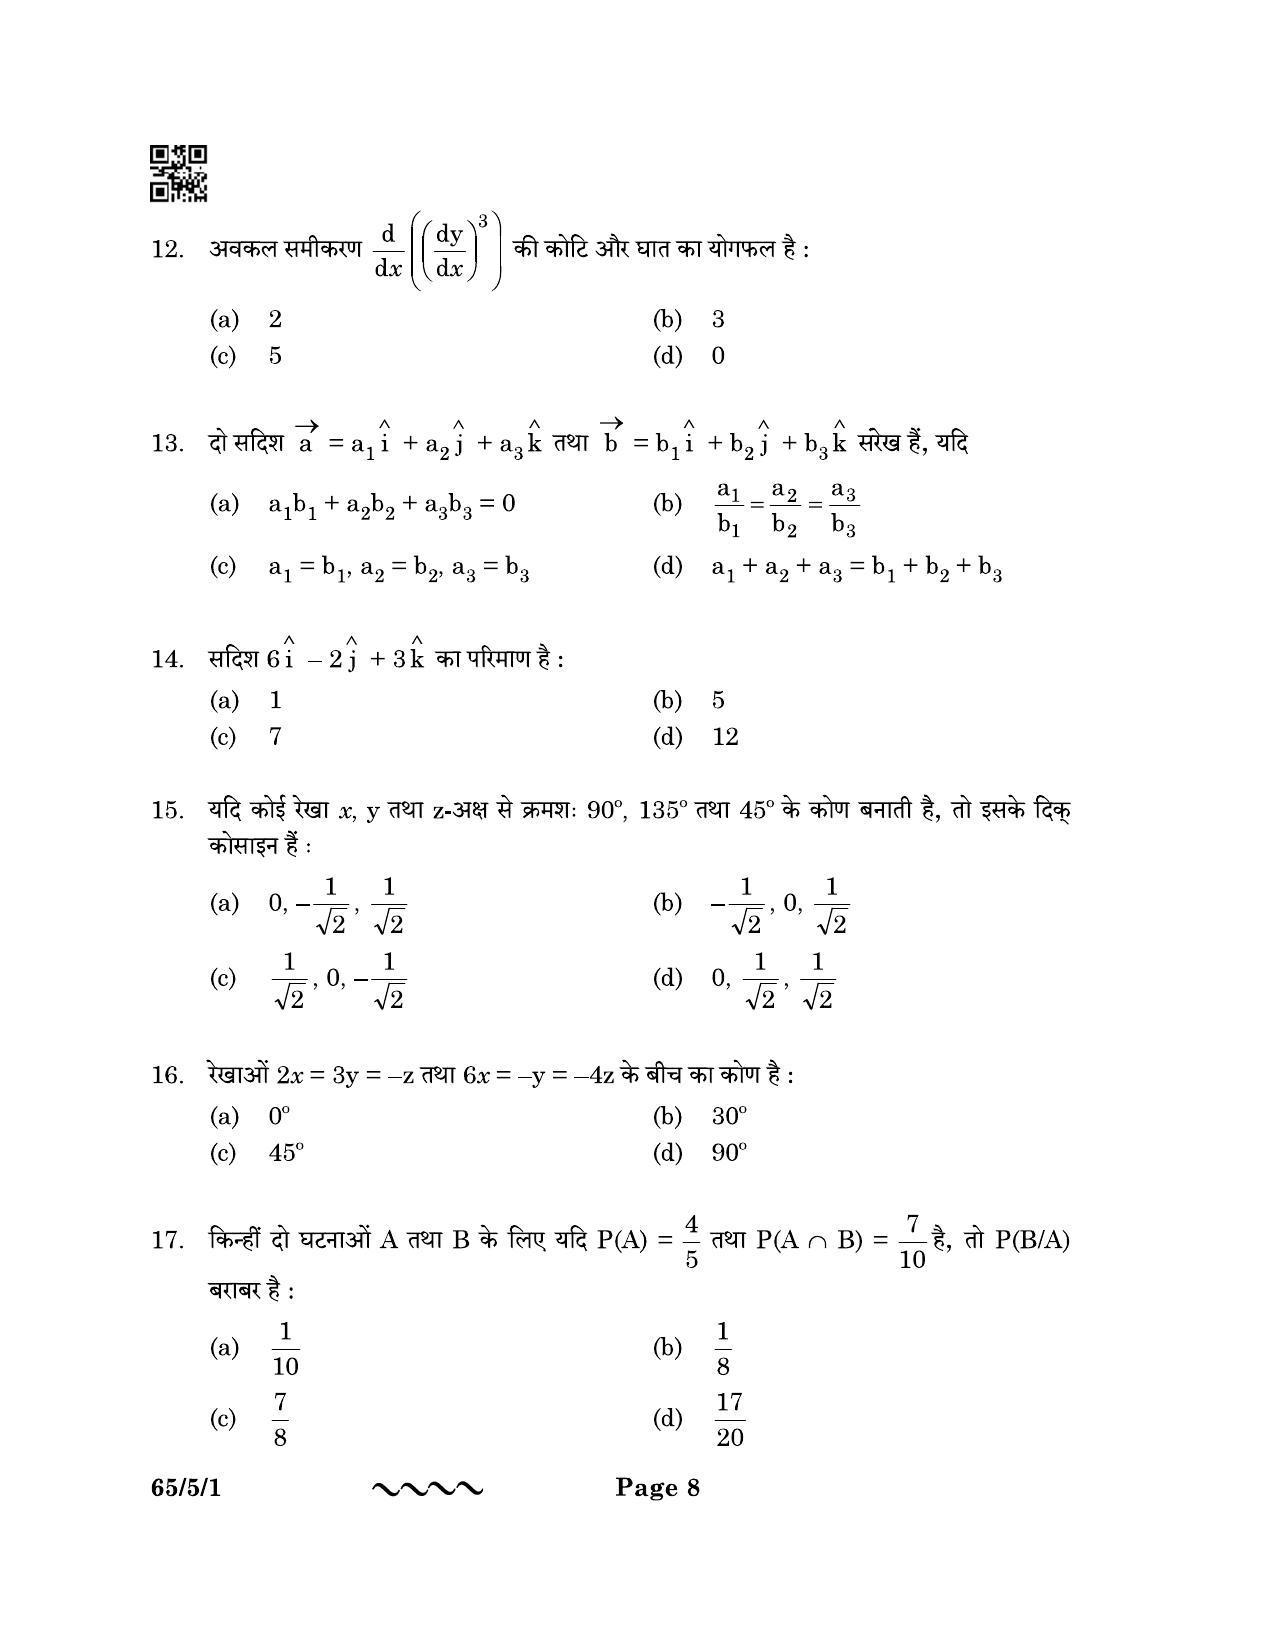 CBSE Class 12 65-5-1 MATHEMATICS 2023 Question Paper - Page 8